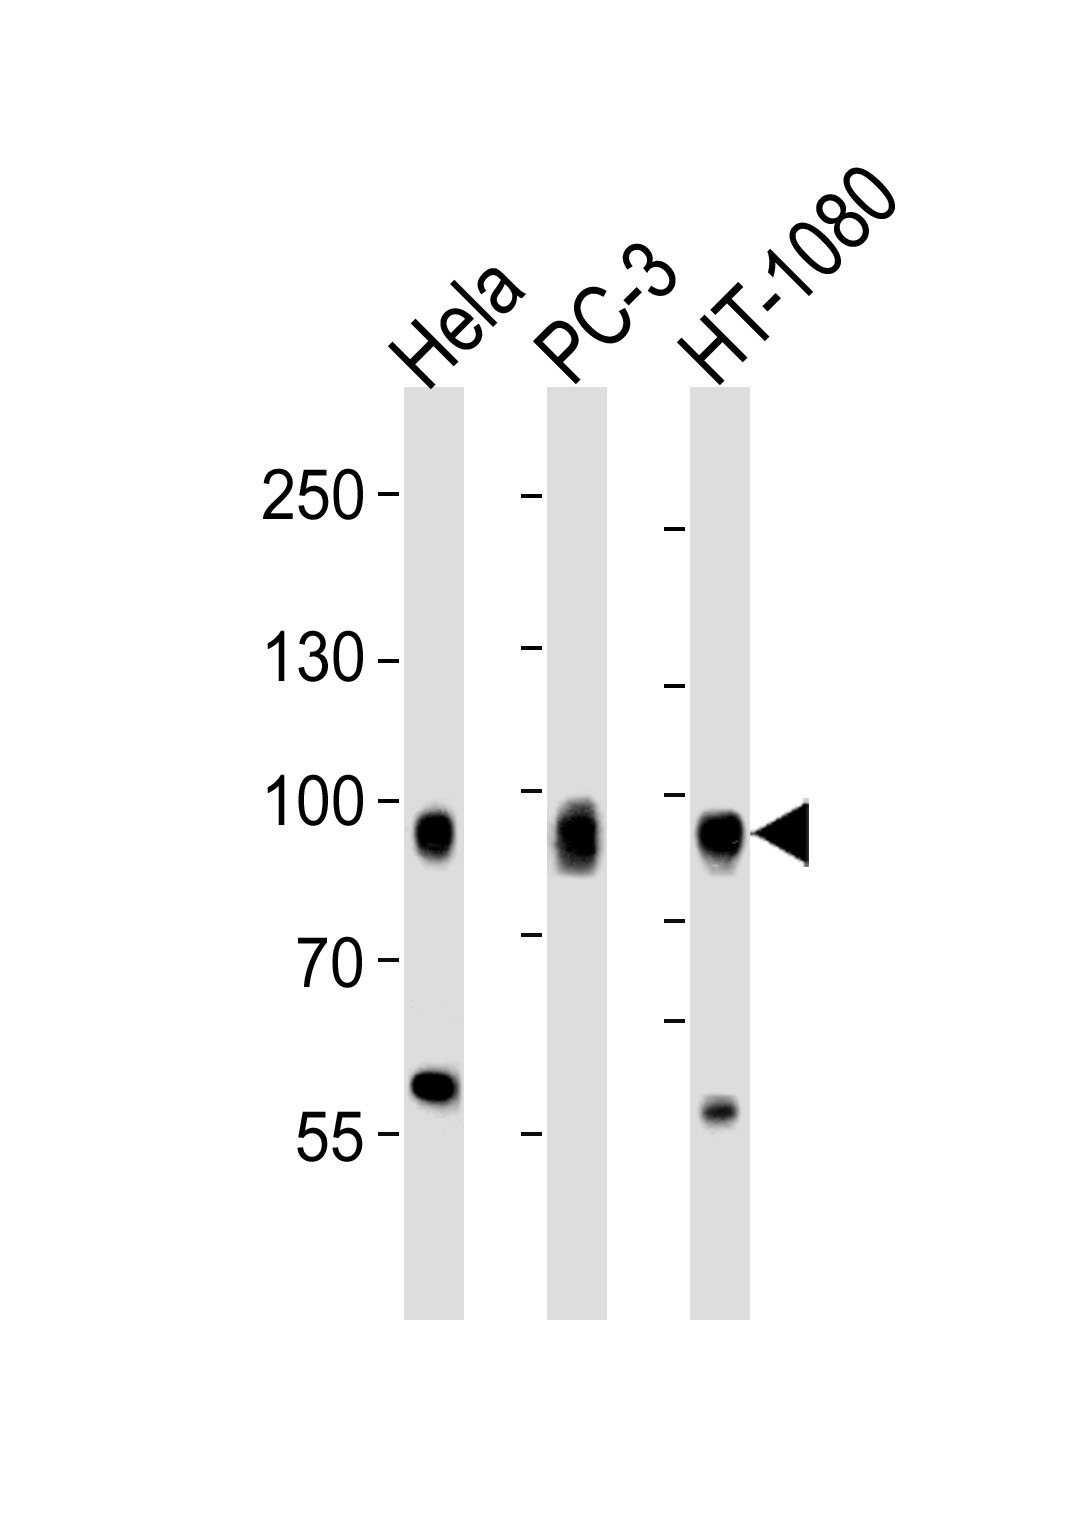 WB - CD44 Antibody (C-term) AP20764c